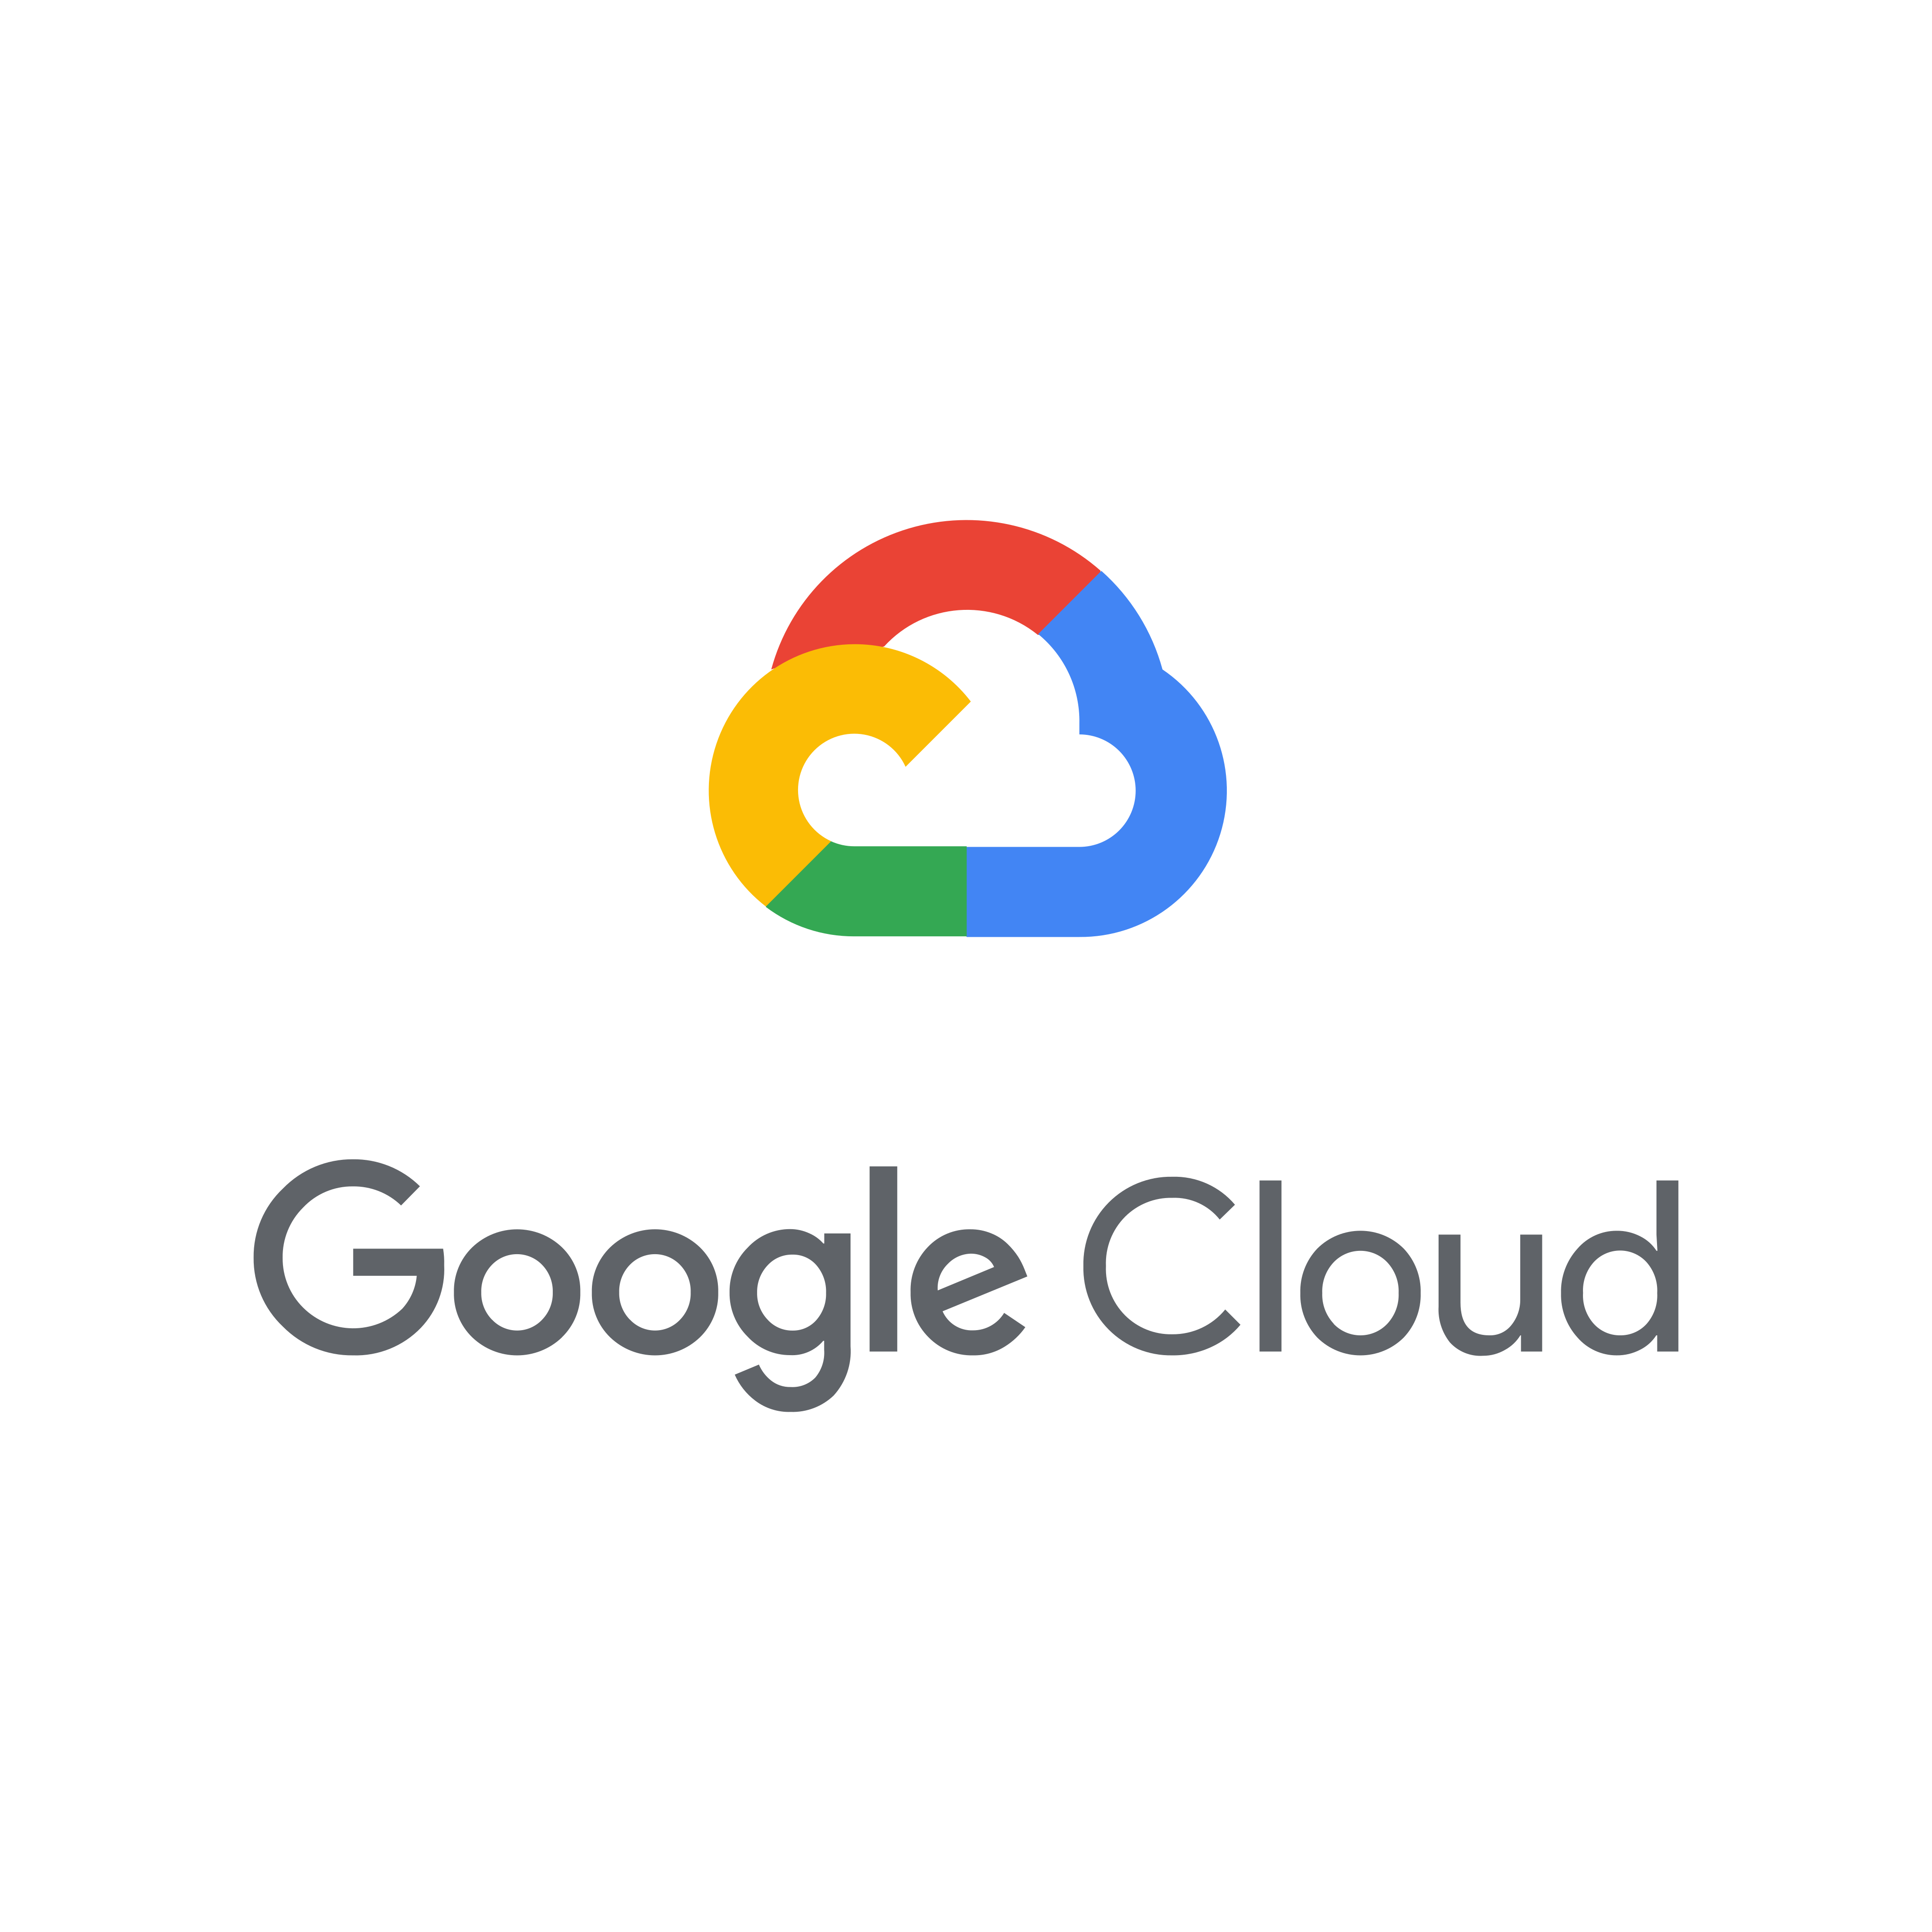 Google Cloud- Partner's network